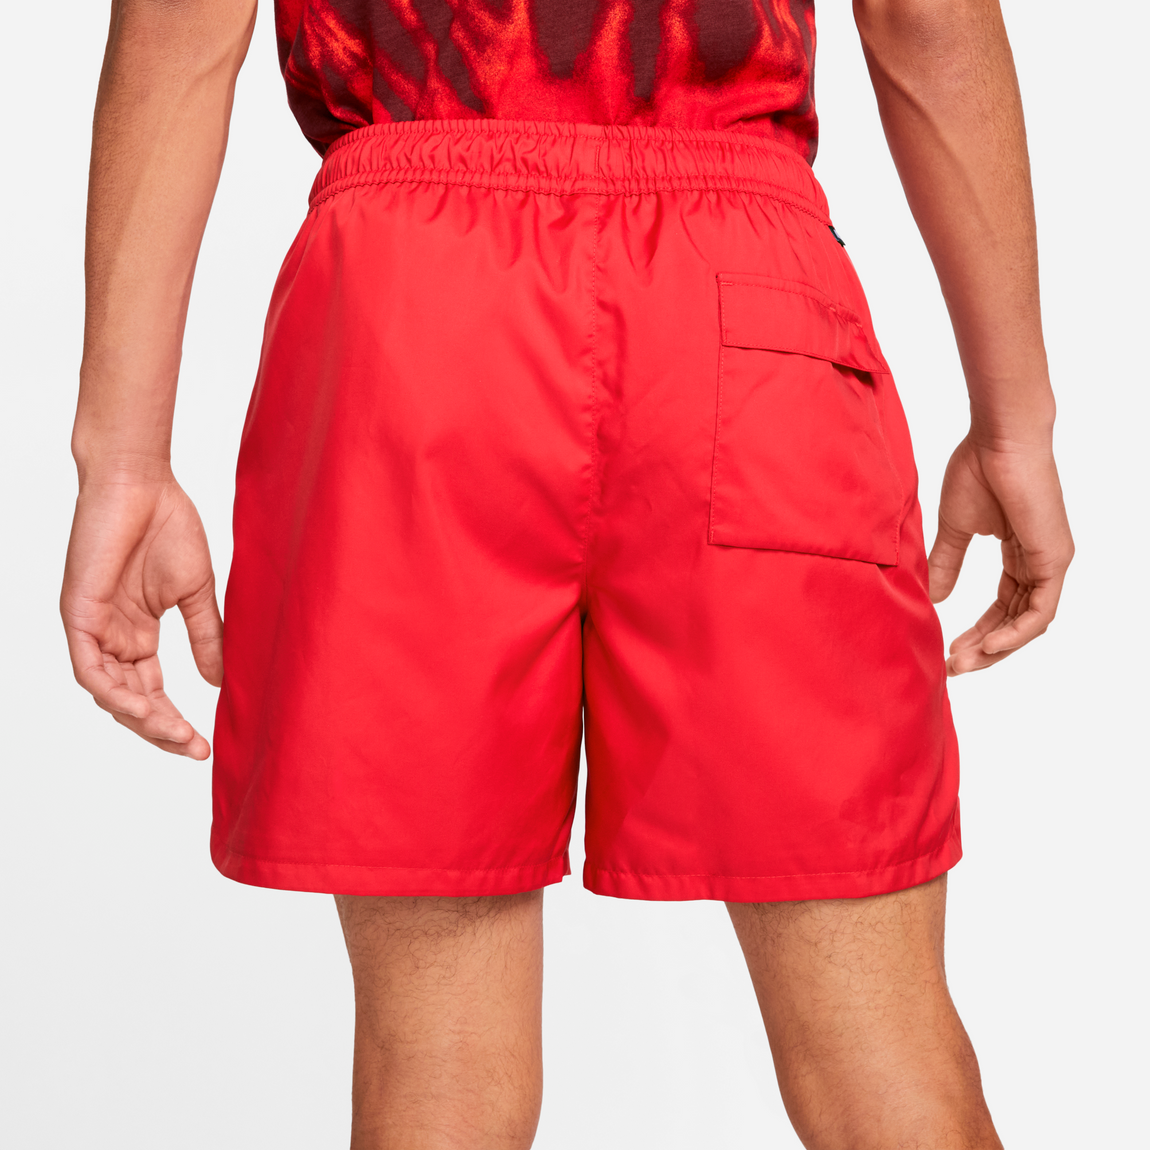 Nike Sportswear Sport Essentials Shorts (University Red/White) - Nike Sportswear Sport Essentials Shorts (University Red/White) - 